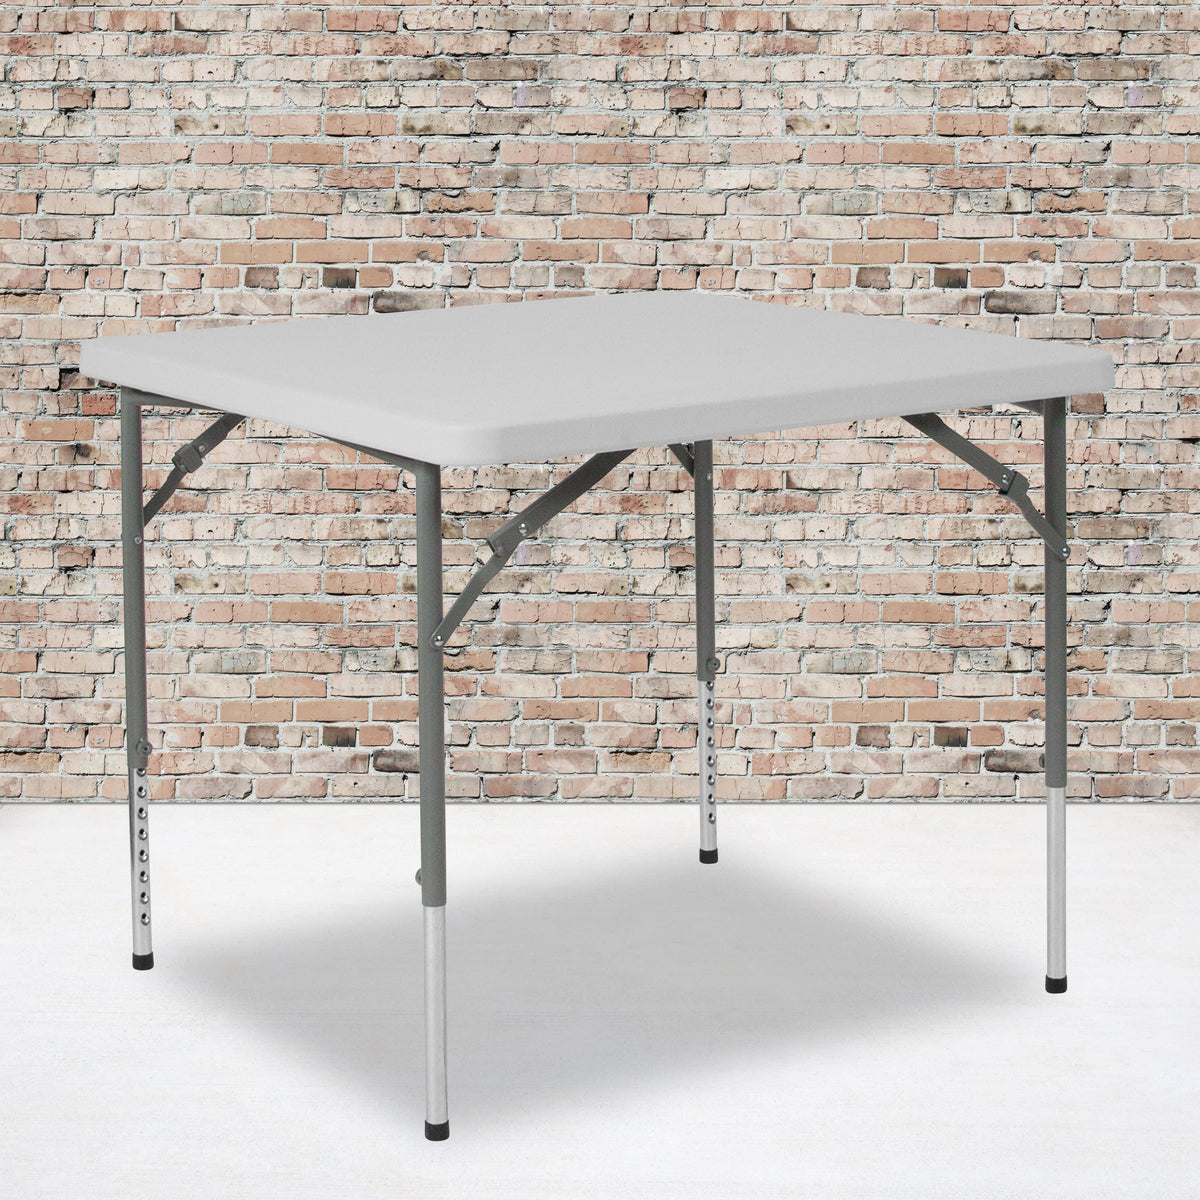 2.79-Foot Square Height Adjustable Granite White Plastic Folding Table